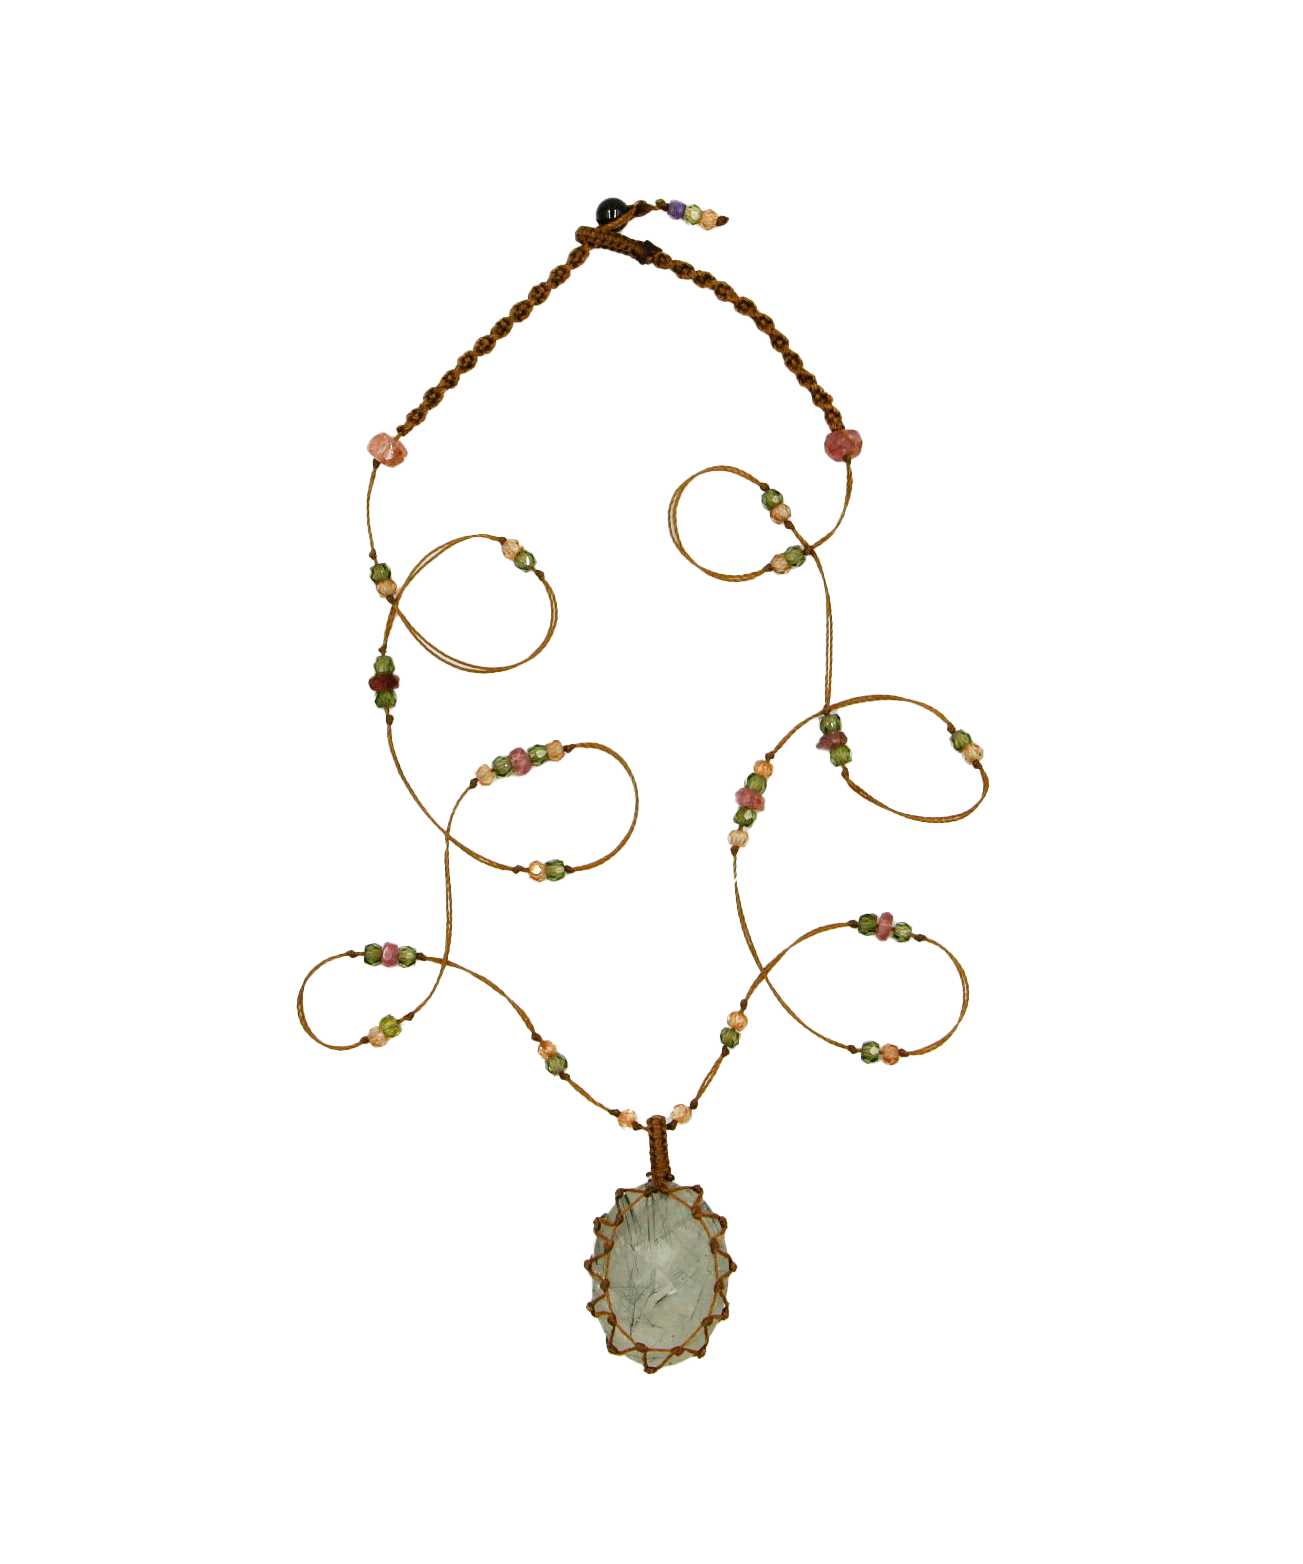 Tibetan Short Necklace - Black Rutile Quartz - Mix Ruby Emerald Sapphire - Tobacco Thread